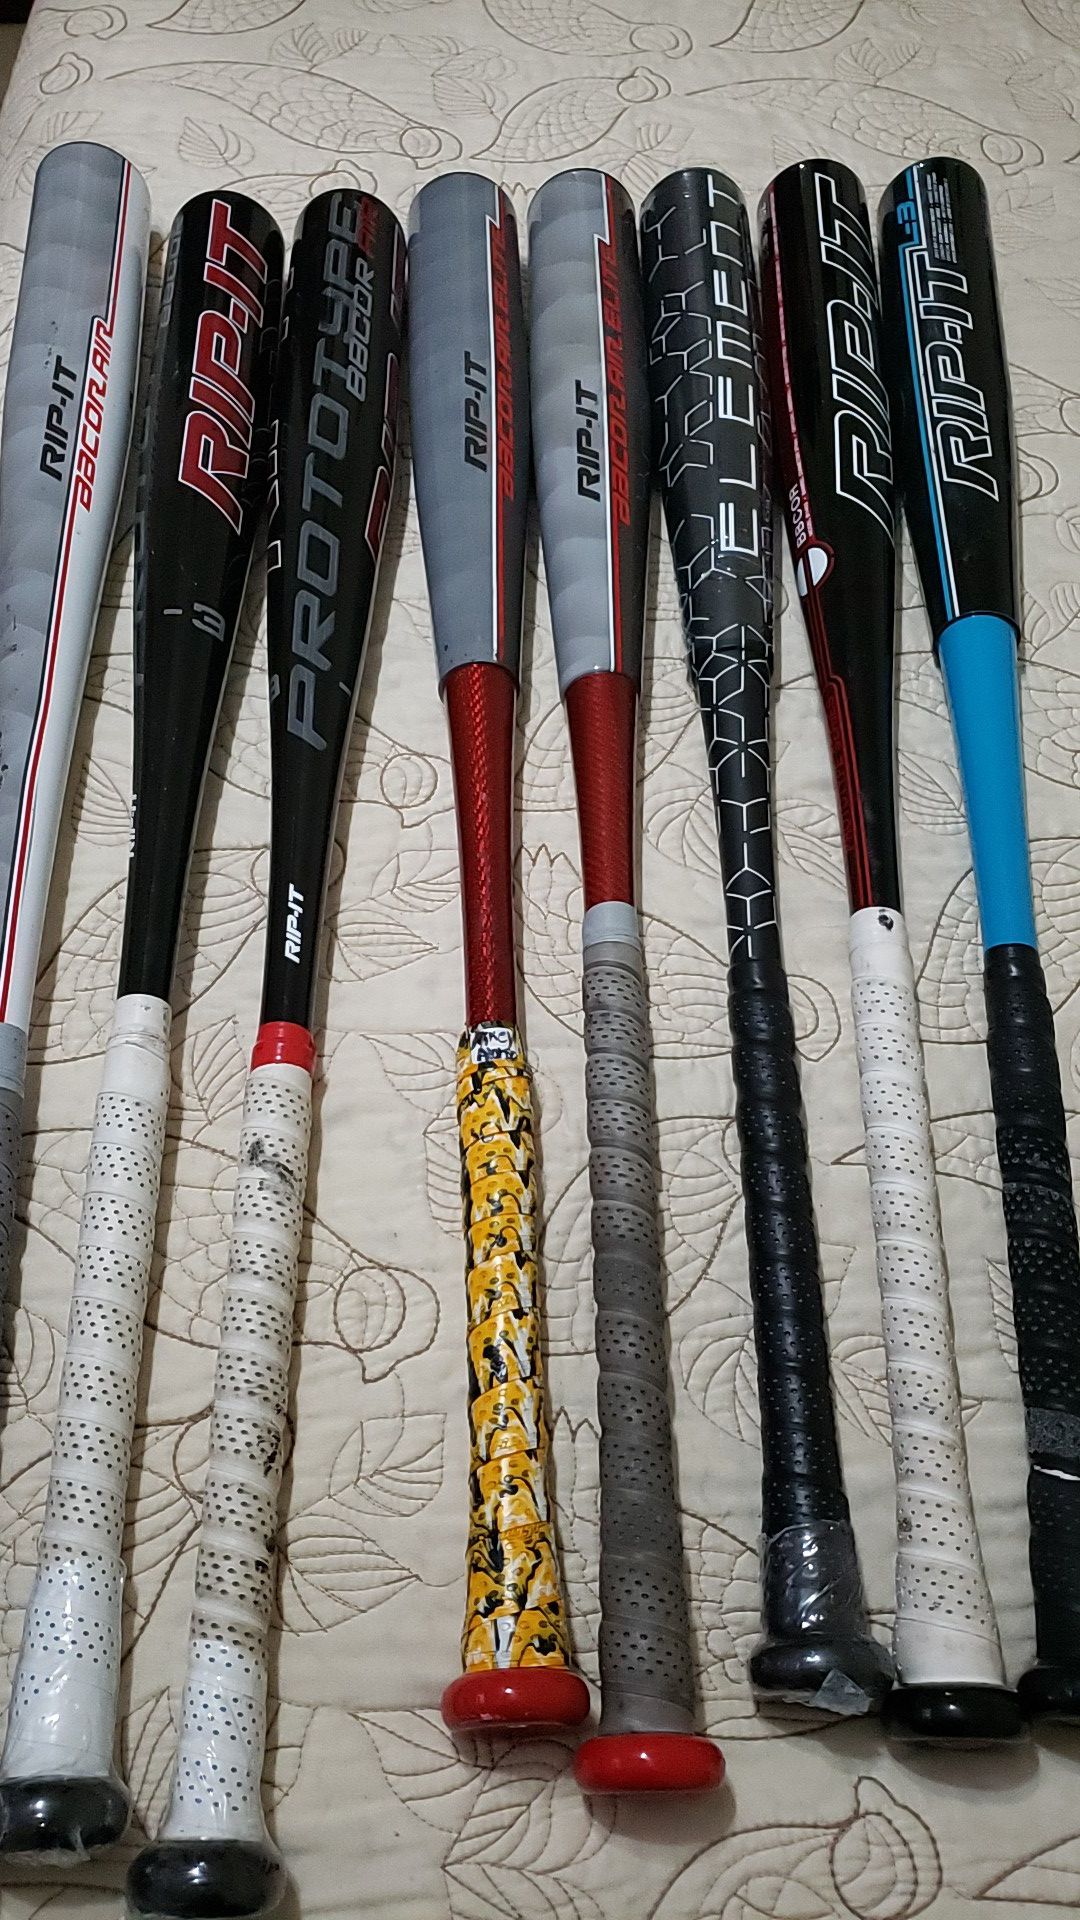 RIP-IT baseball bats for sale